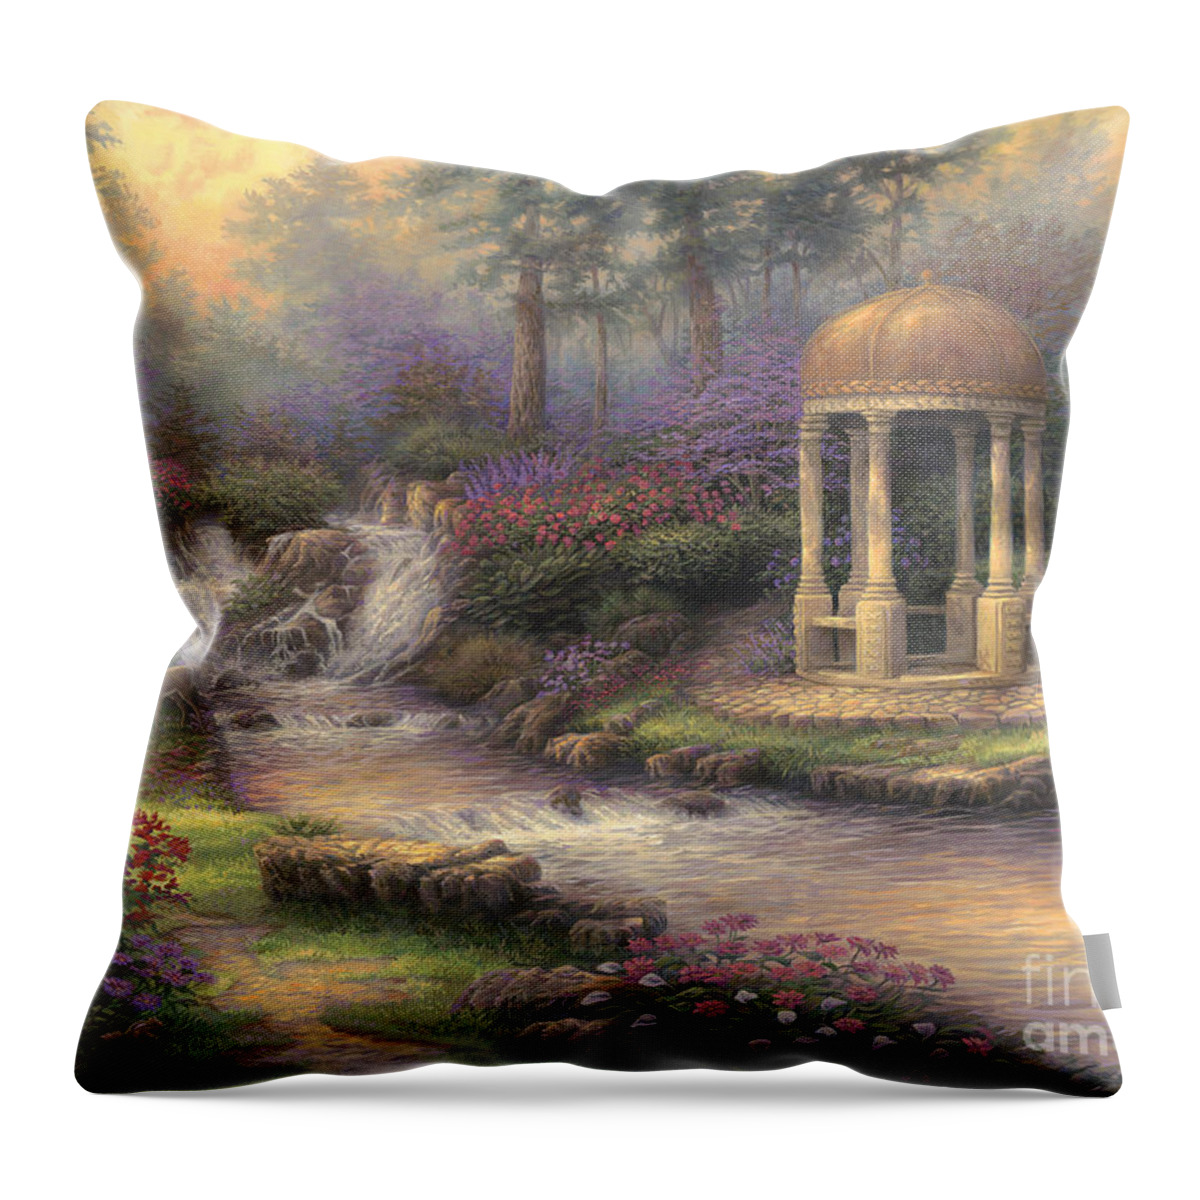 Garden Of Prayer Throw Pillow featuring the painting Love's Infinity Garden by Chuck Pinson